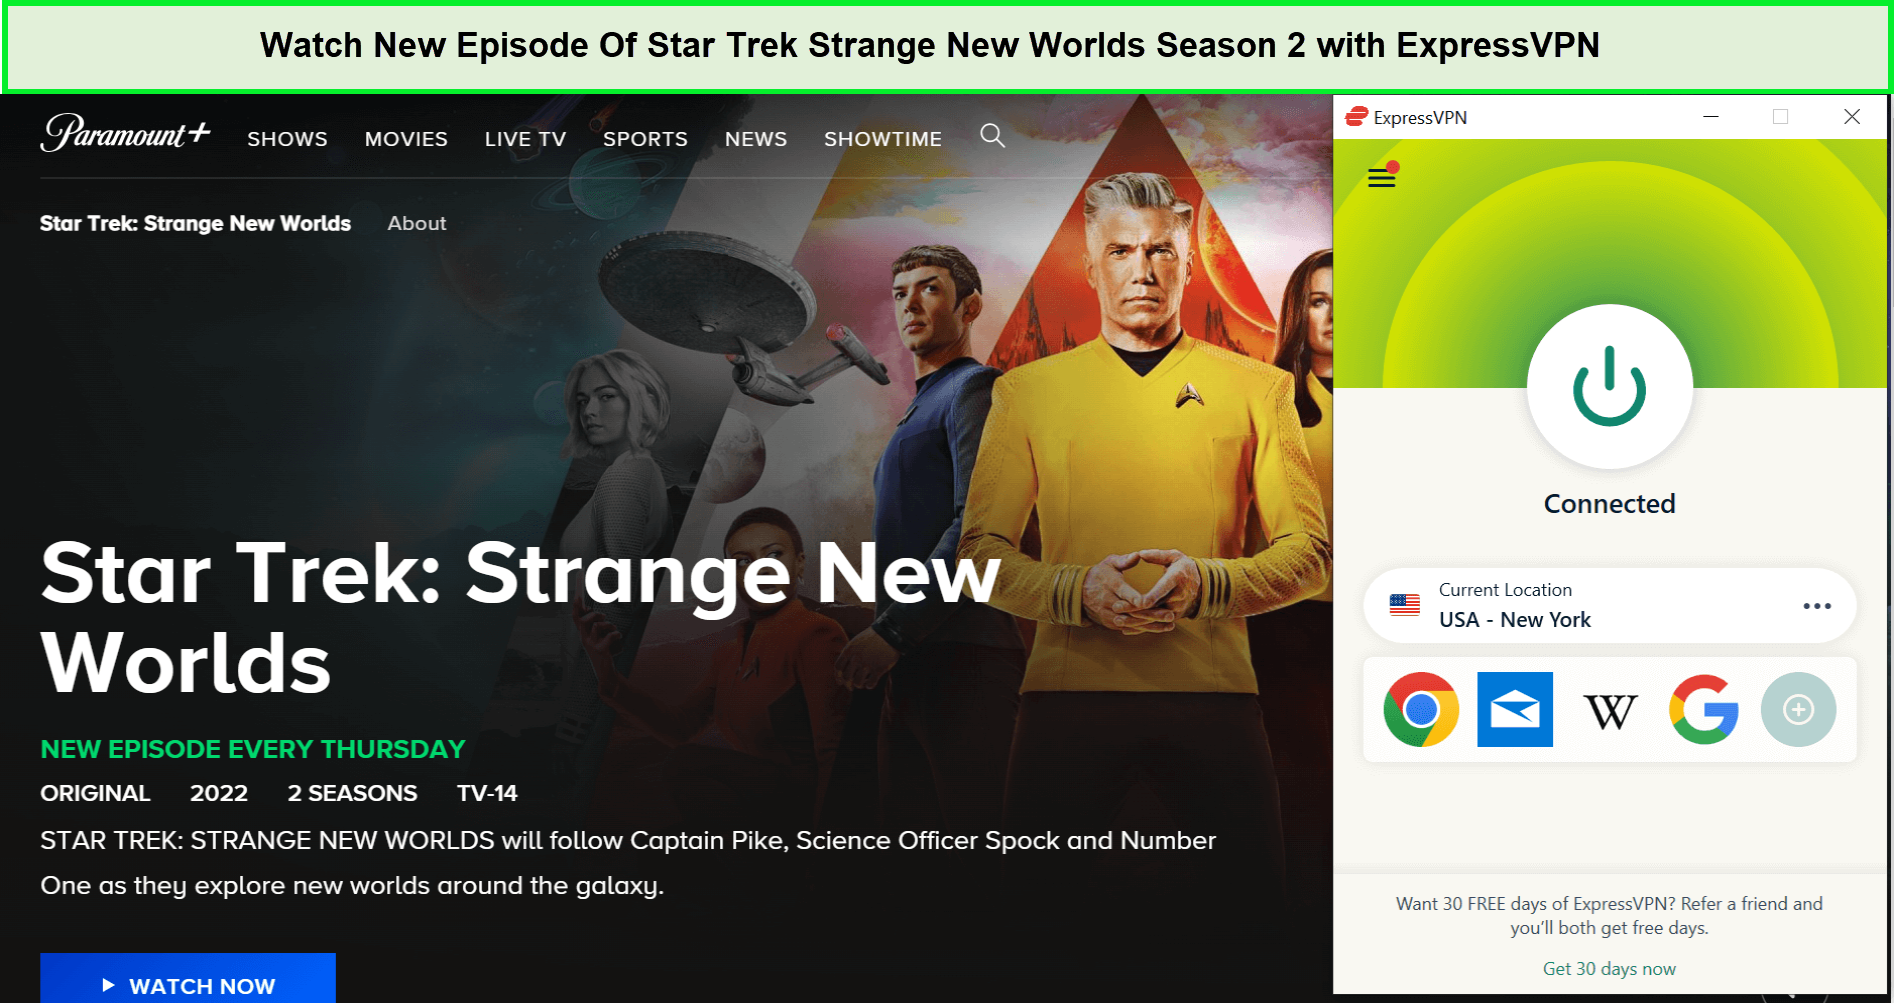 Watch-New-Episode-Of-Star-Trek-Strange-New-Worlds-Season-2-in-South Korea-with-ExpressVPN